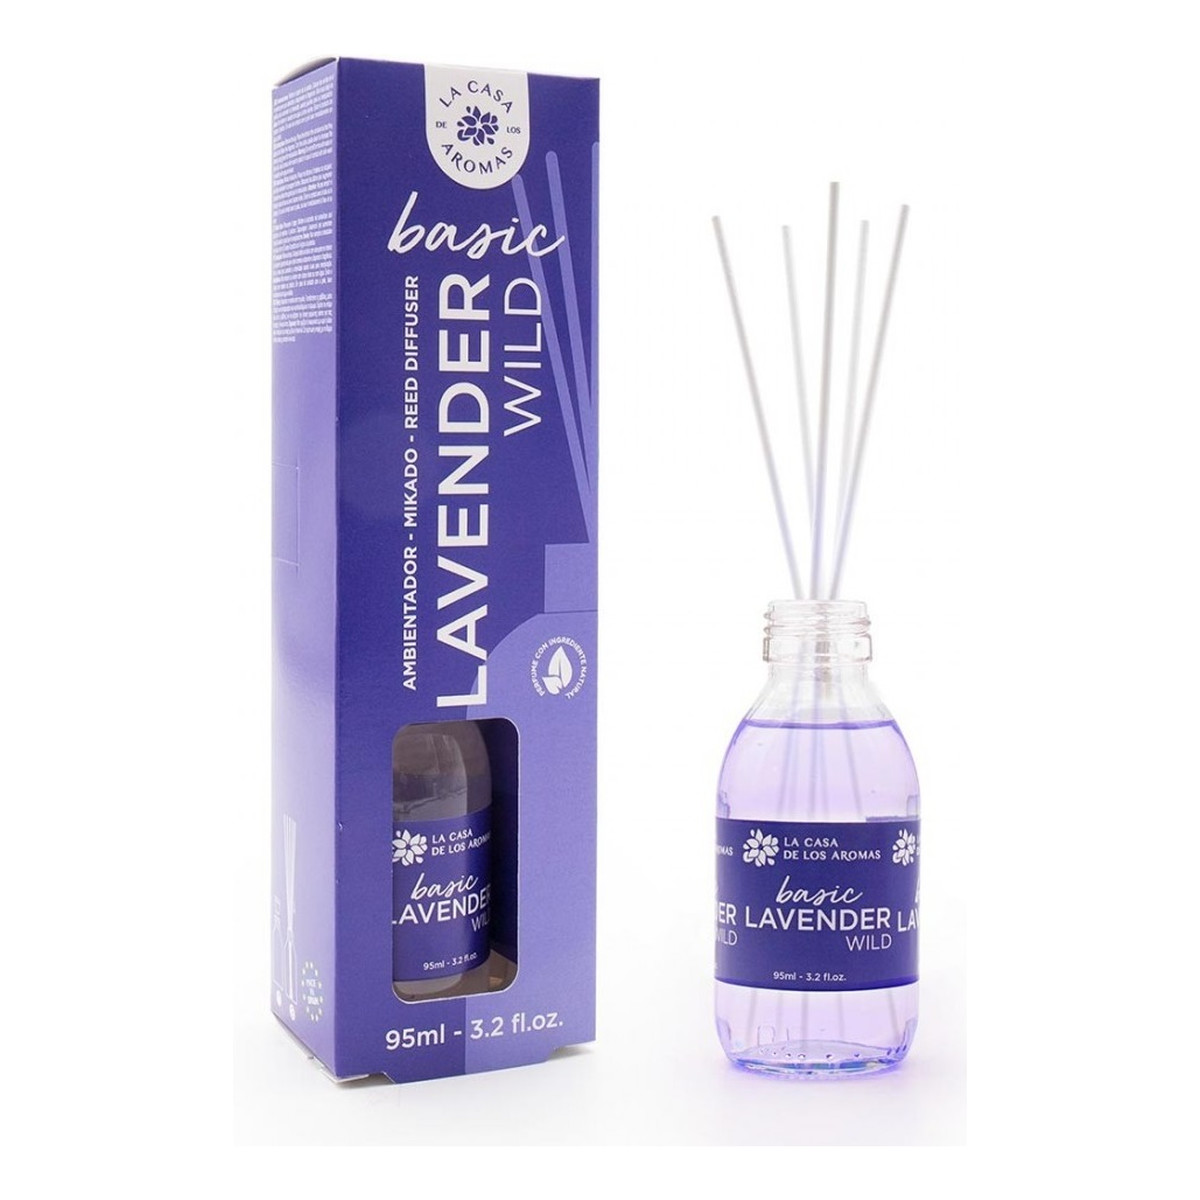 La Casa De Los Aromas Basic patyczki zapachowe lavender wild 95ml